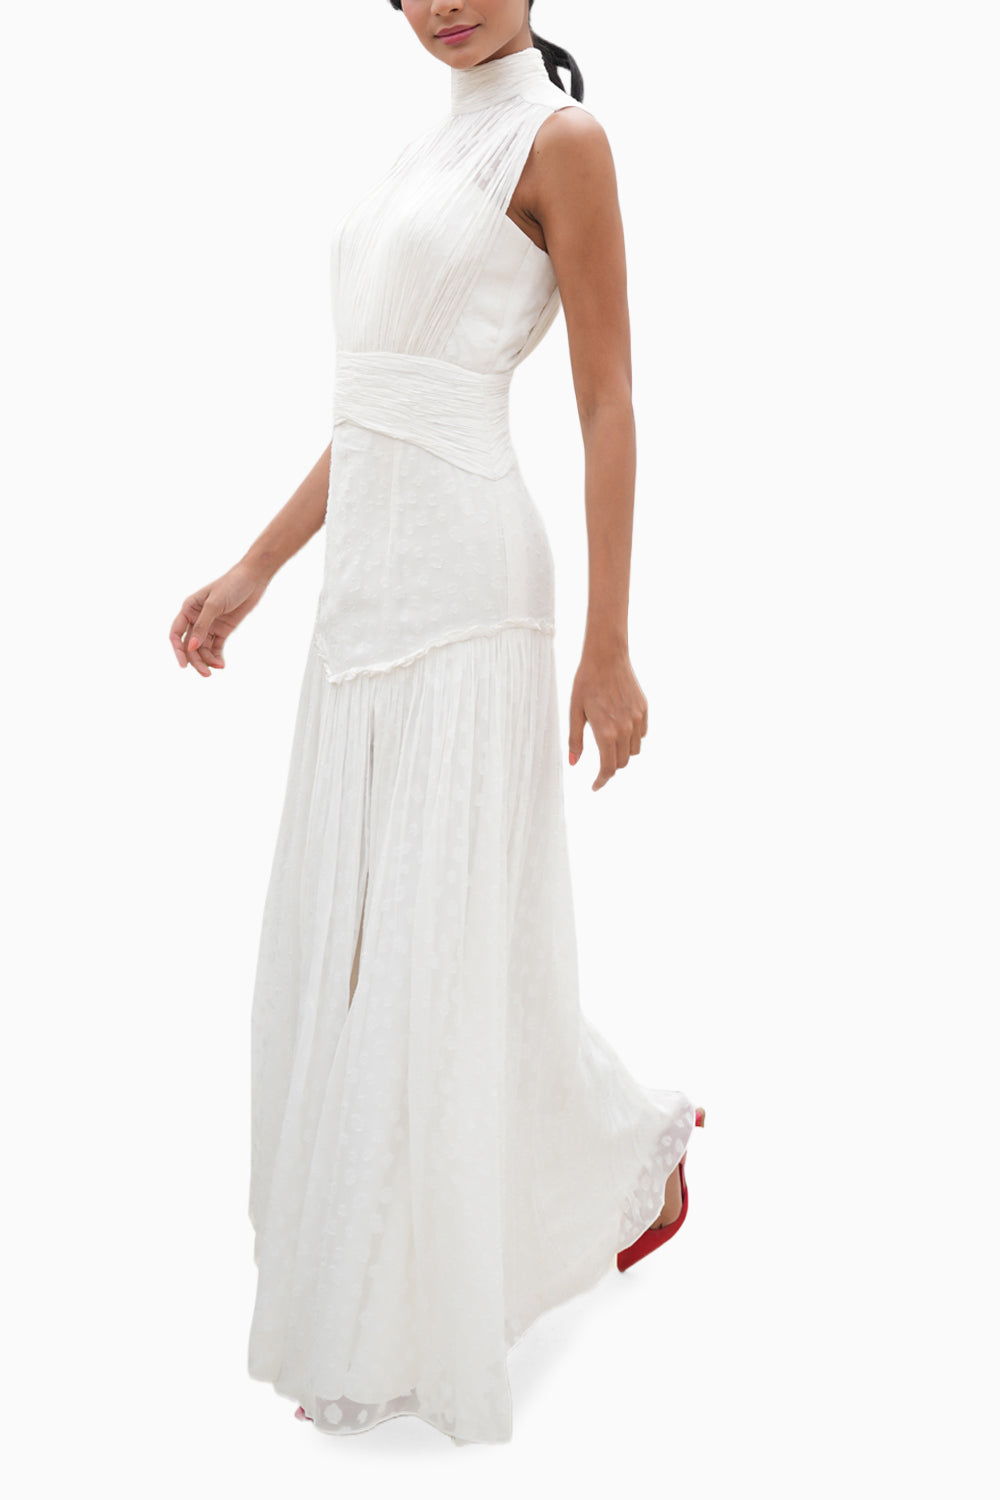 Peru Breeze White Midi Dress